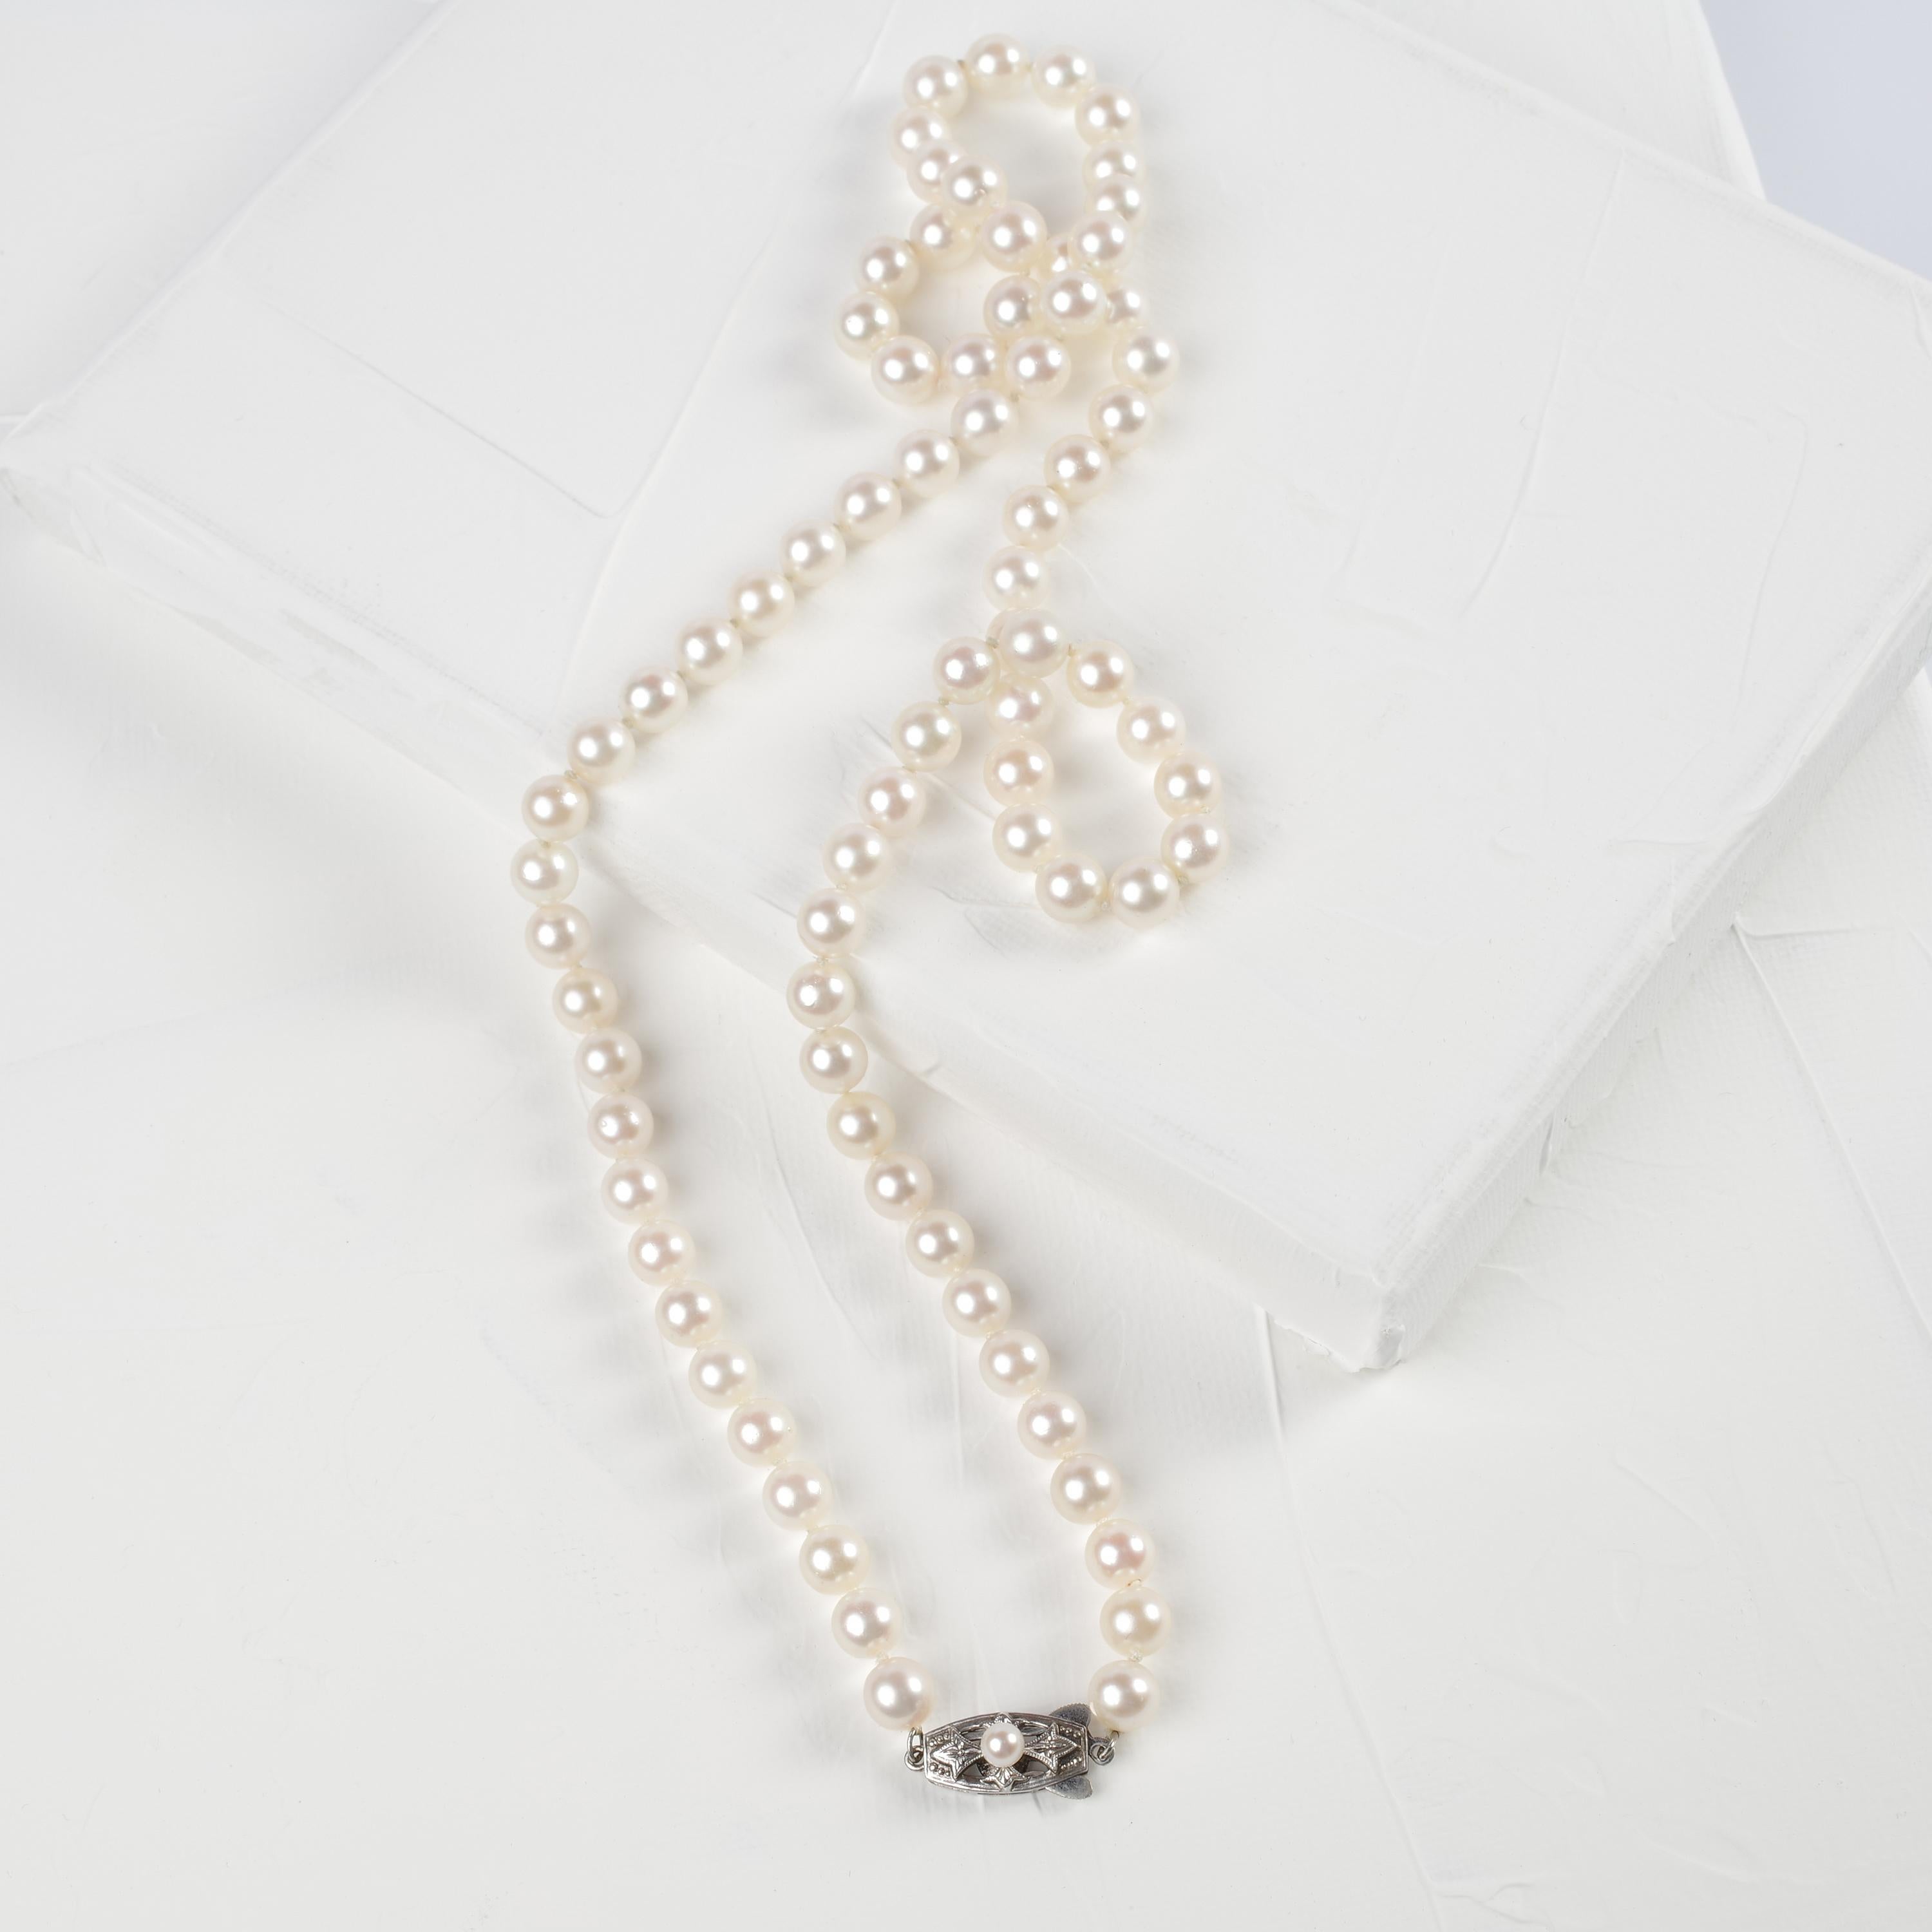 Modern Mikimoto Akoya Pearl Necklace from Marilyn Monroe Era